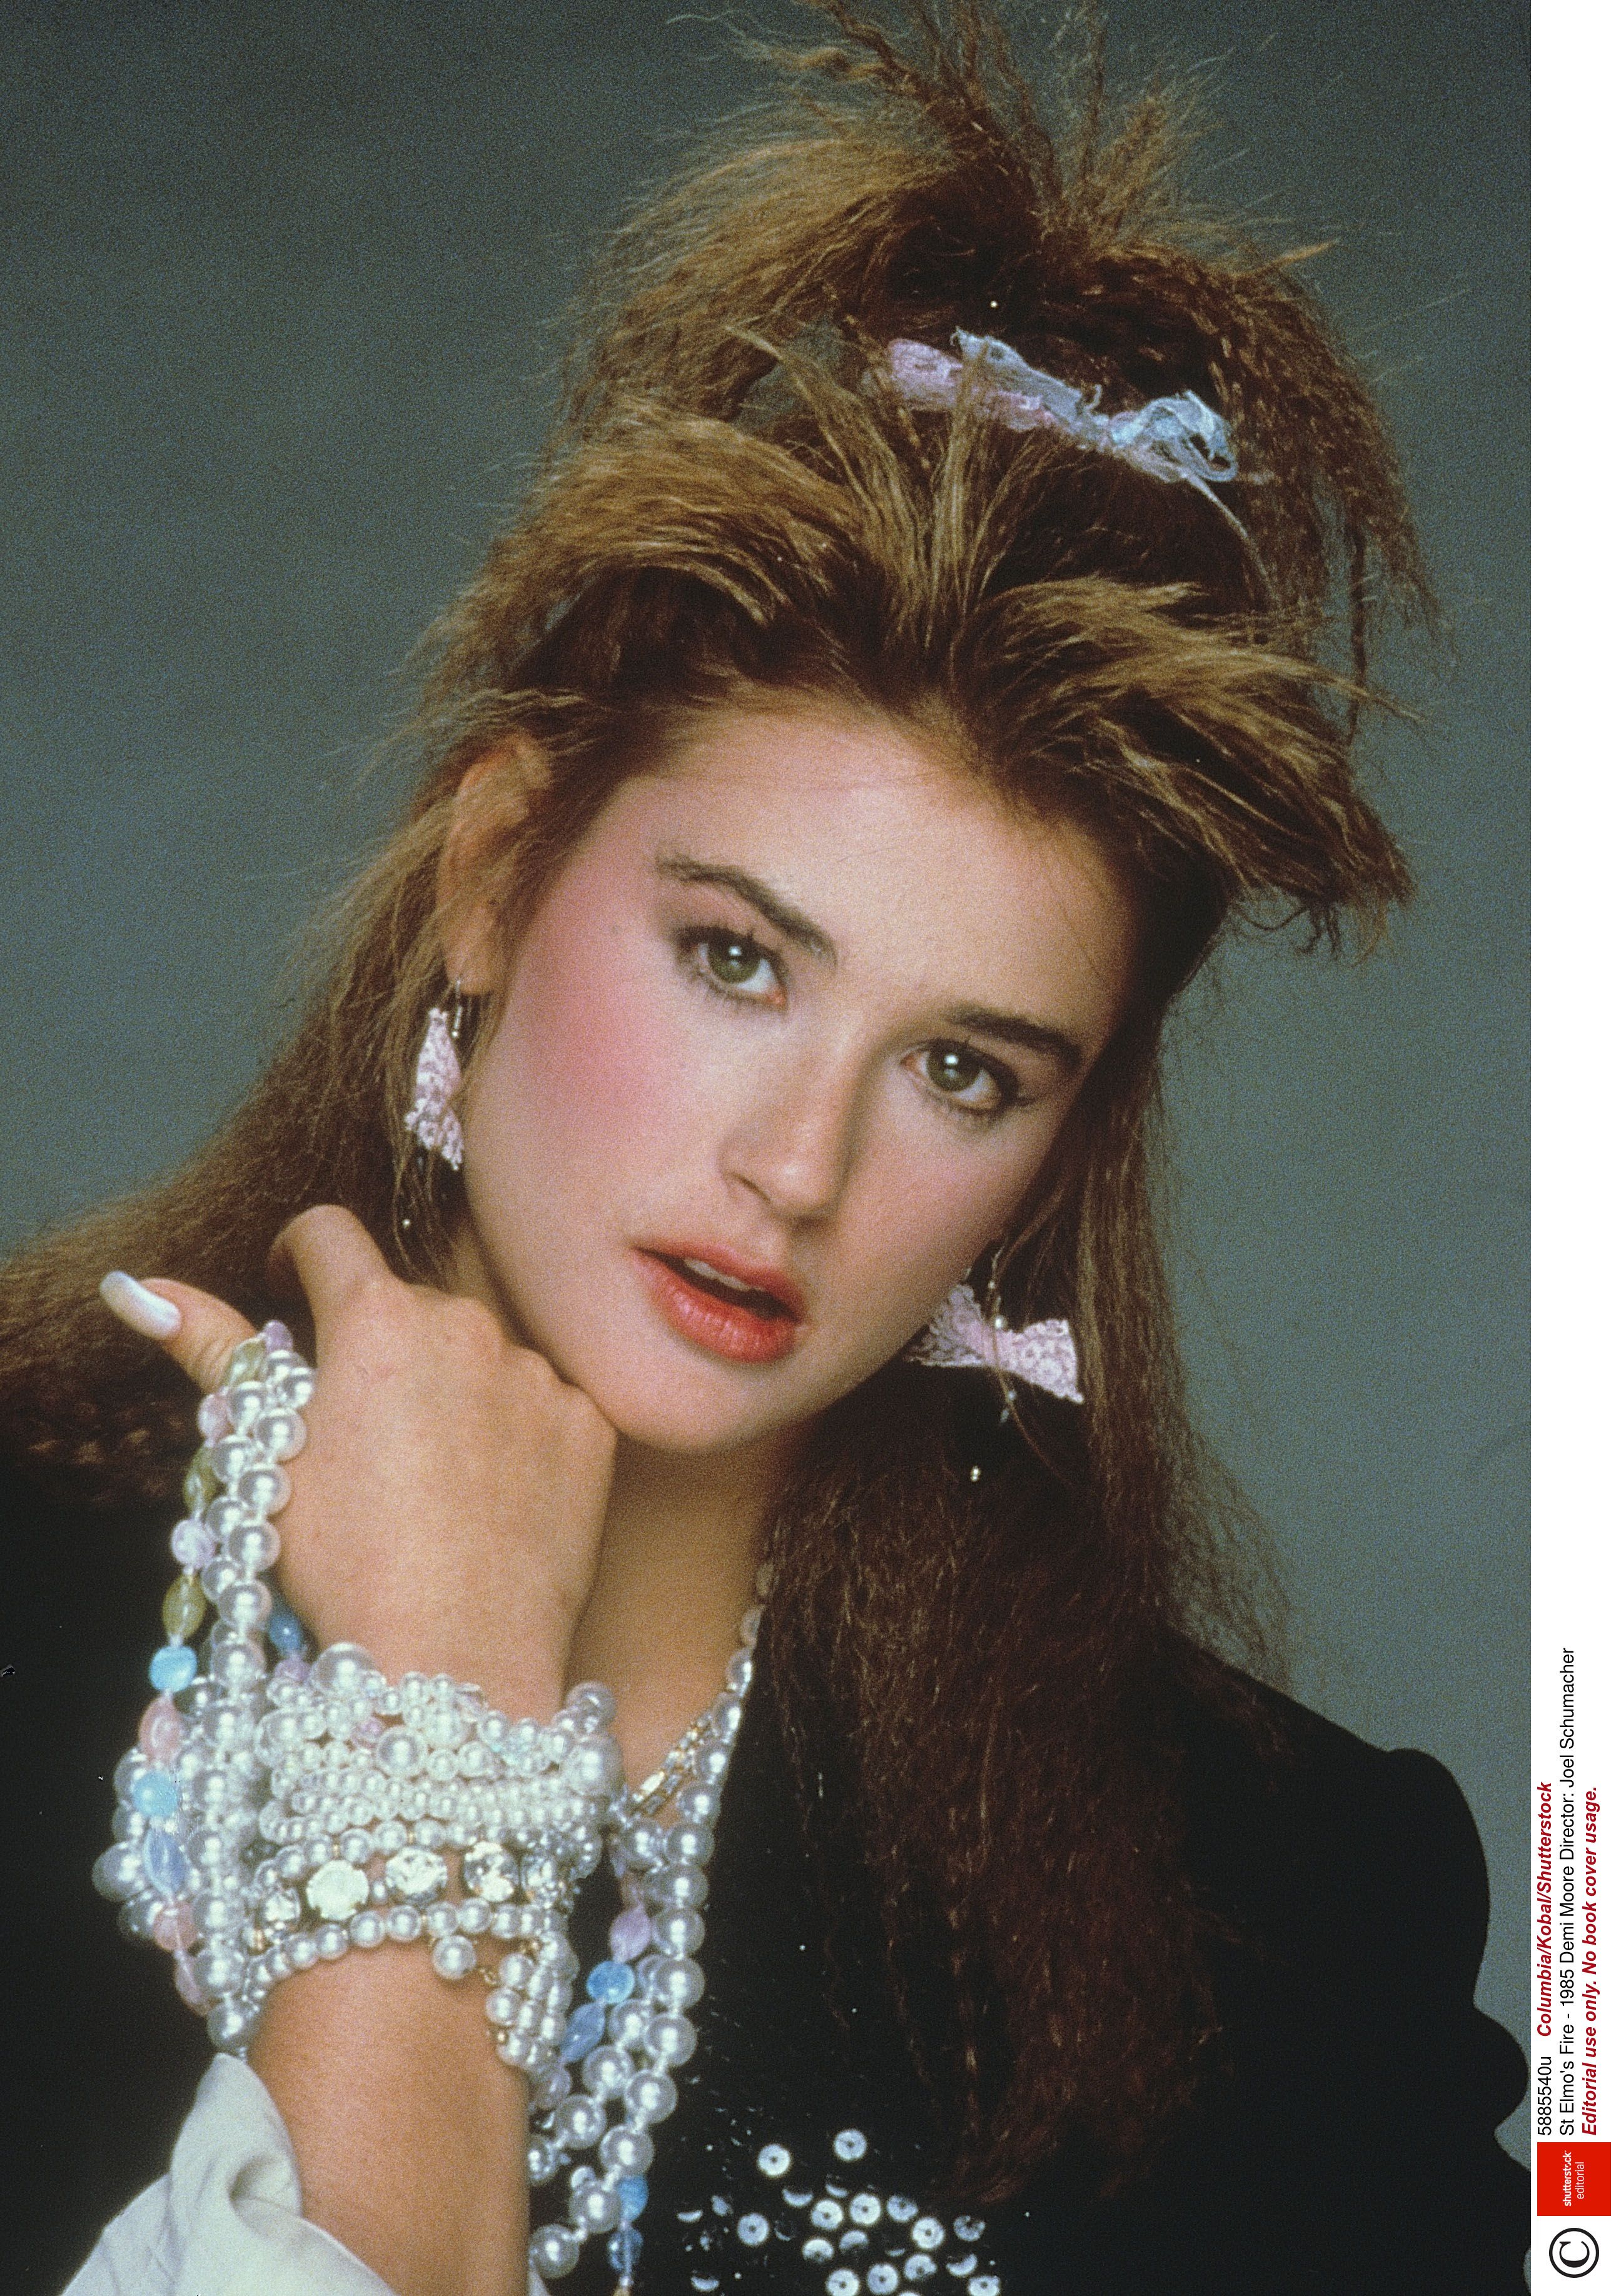 80s fashion website